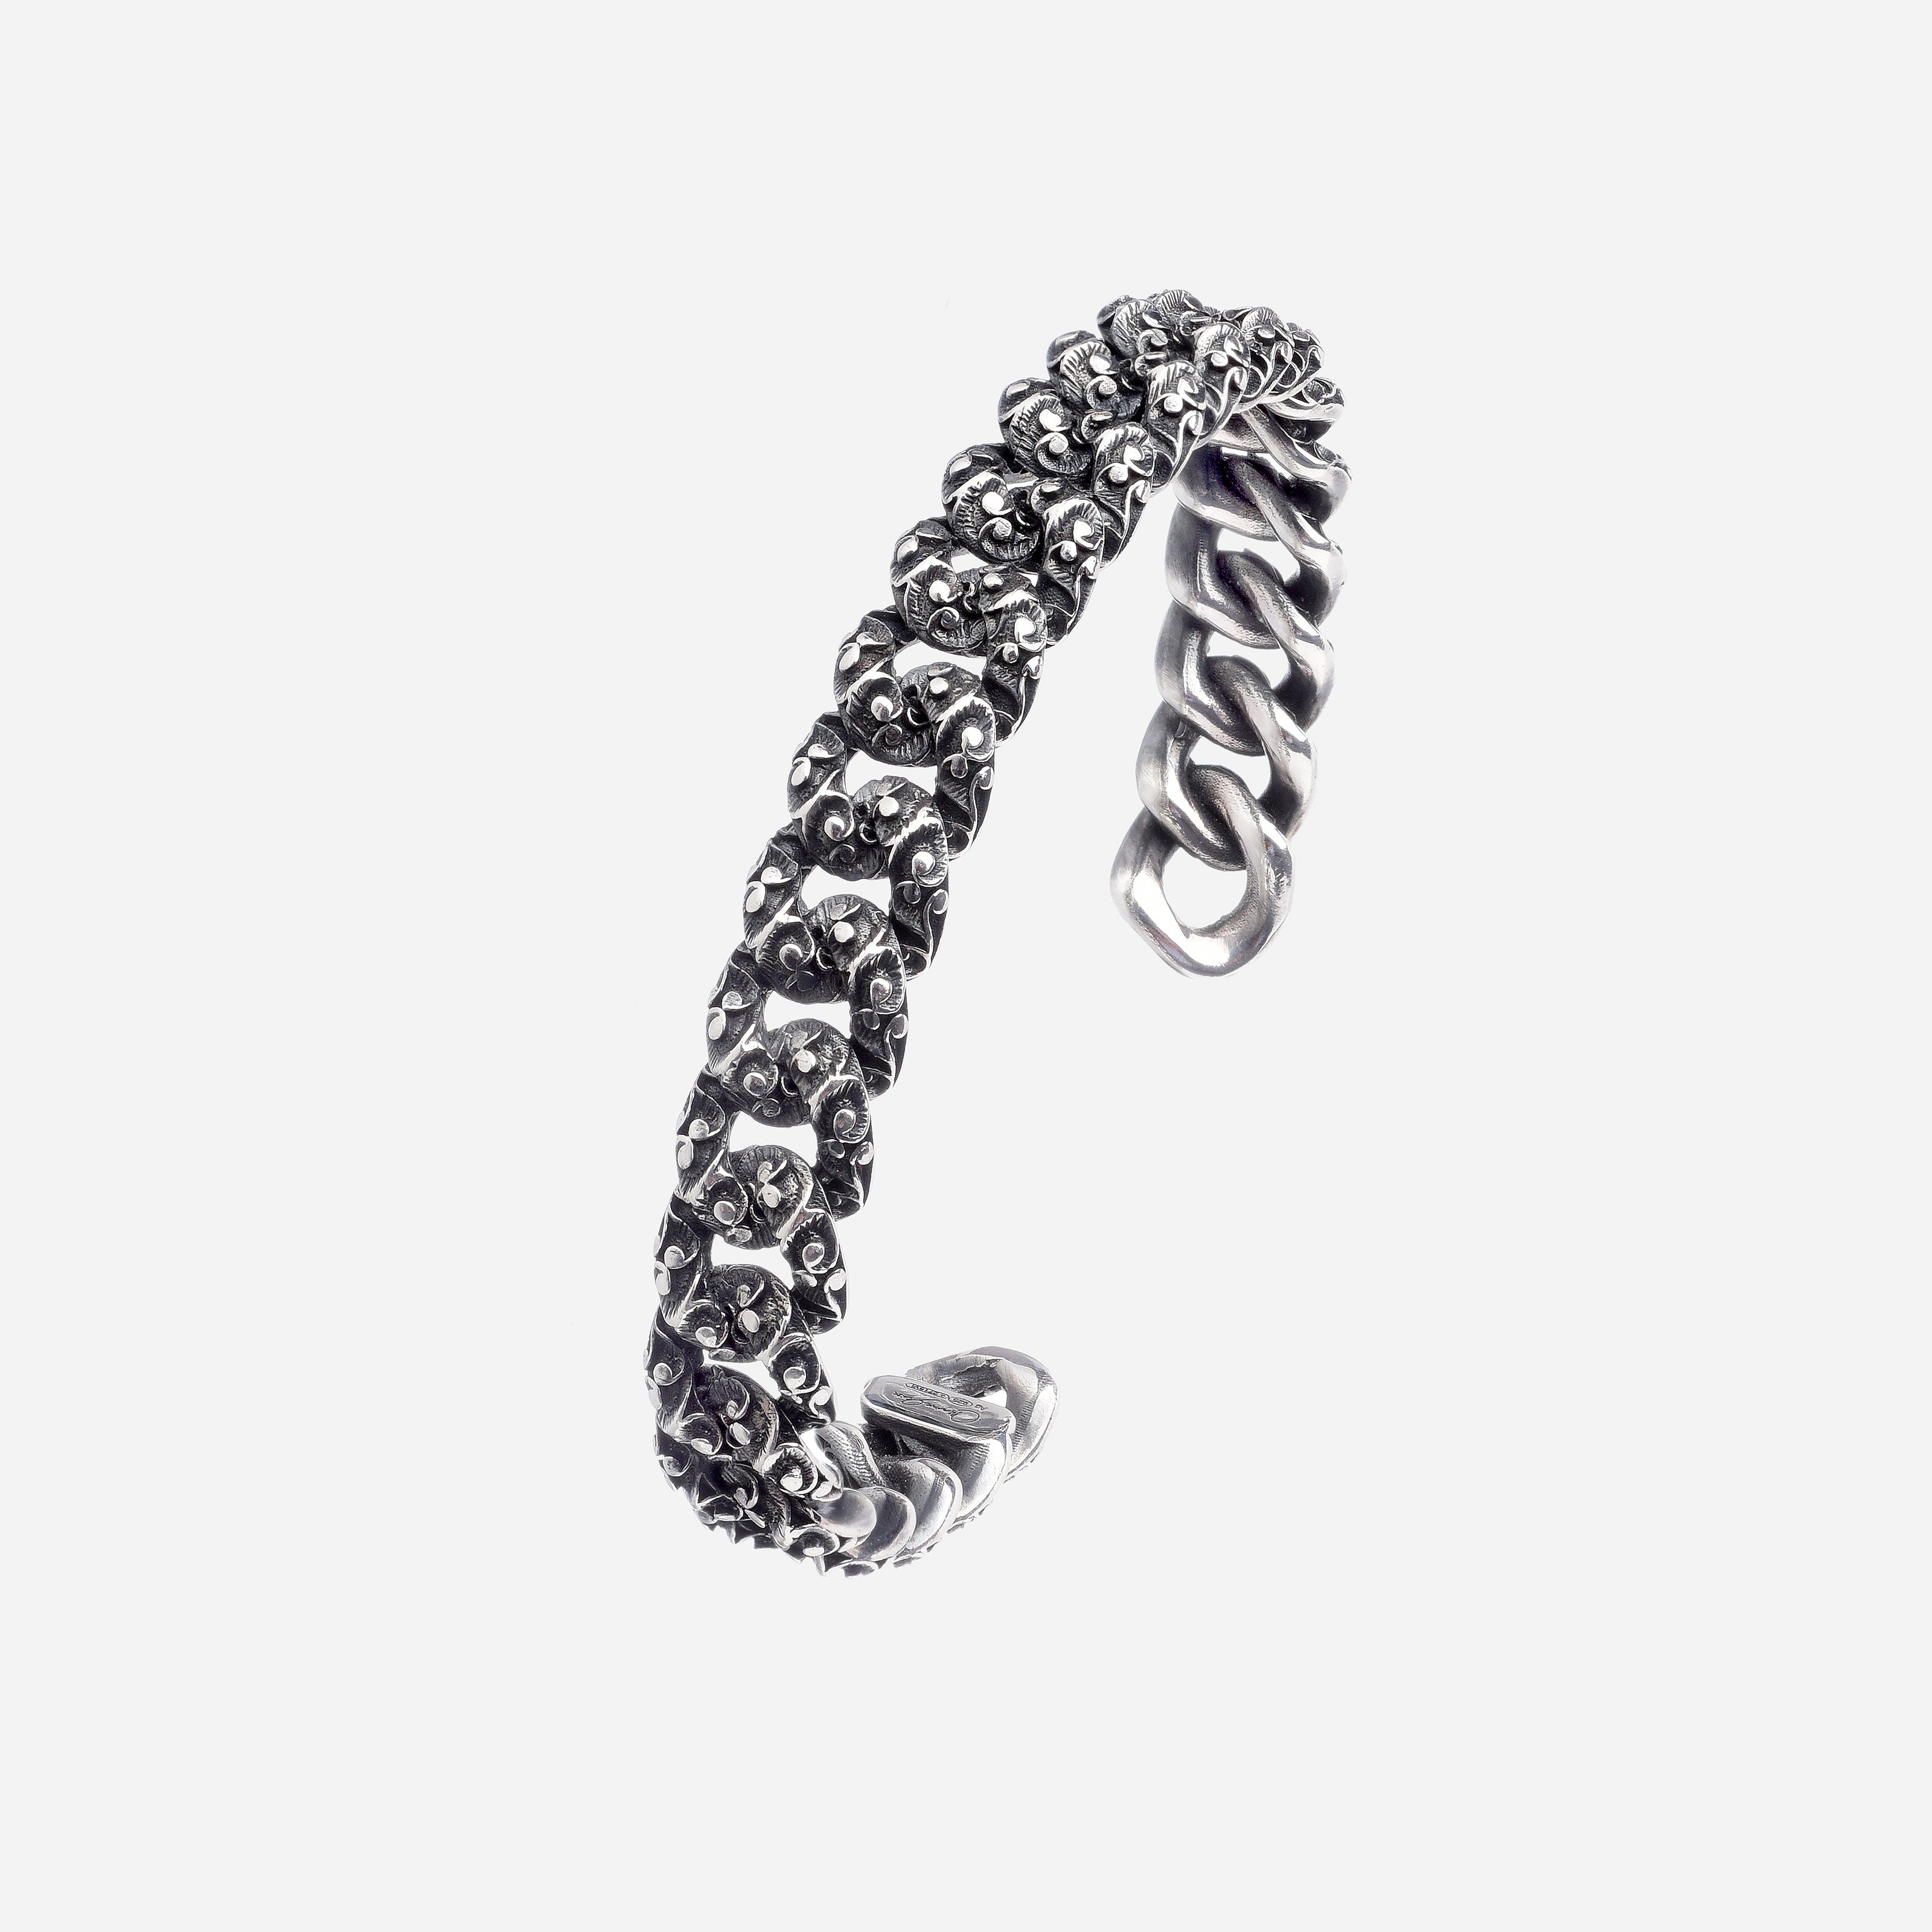 Slave bracelet with rigid groumette